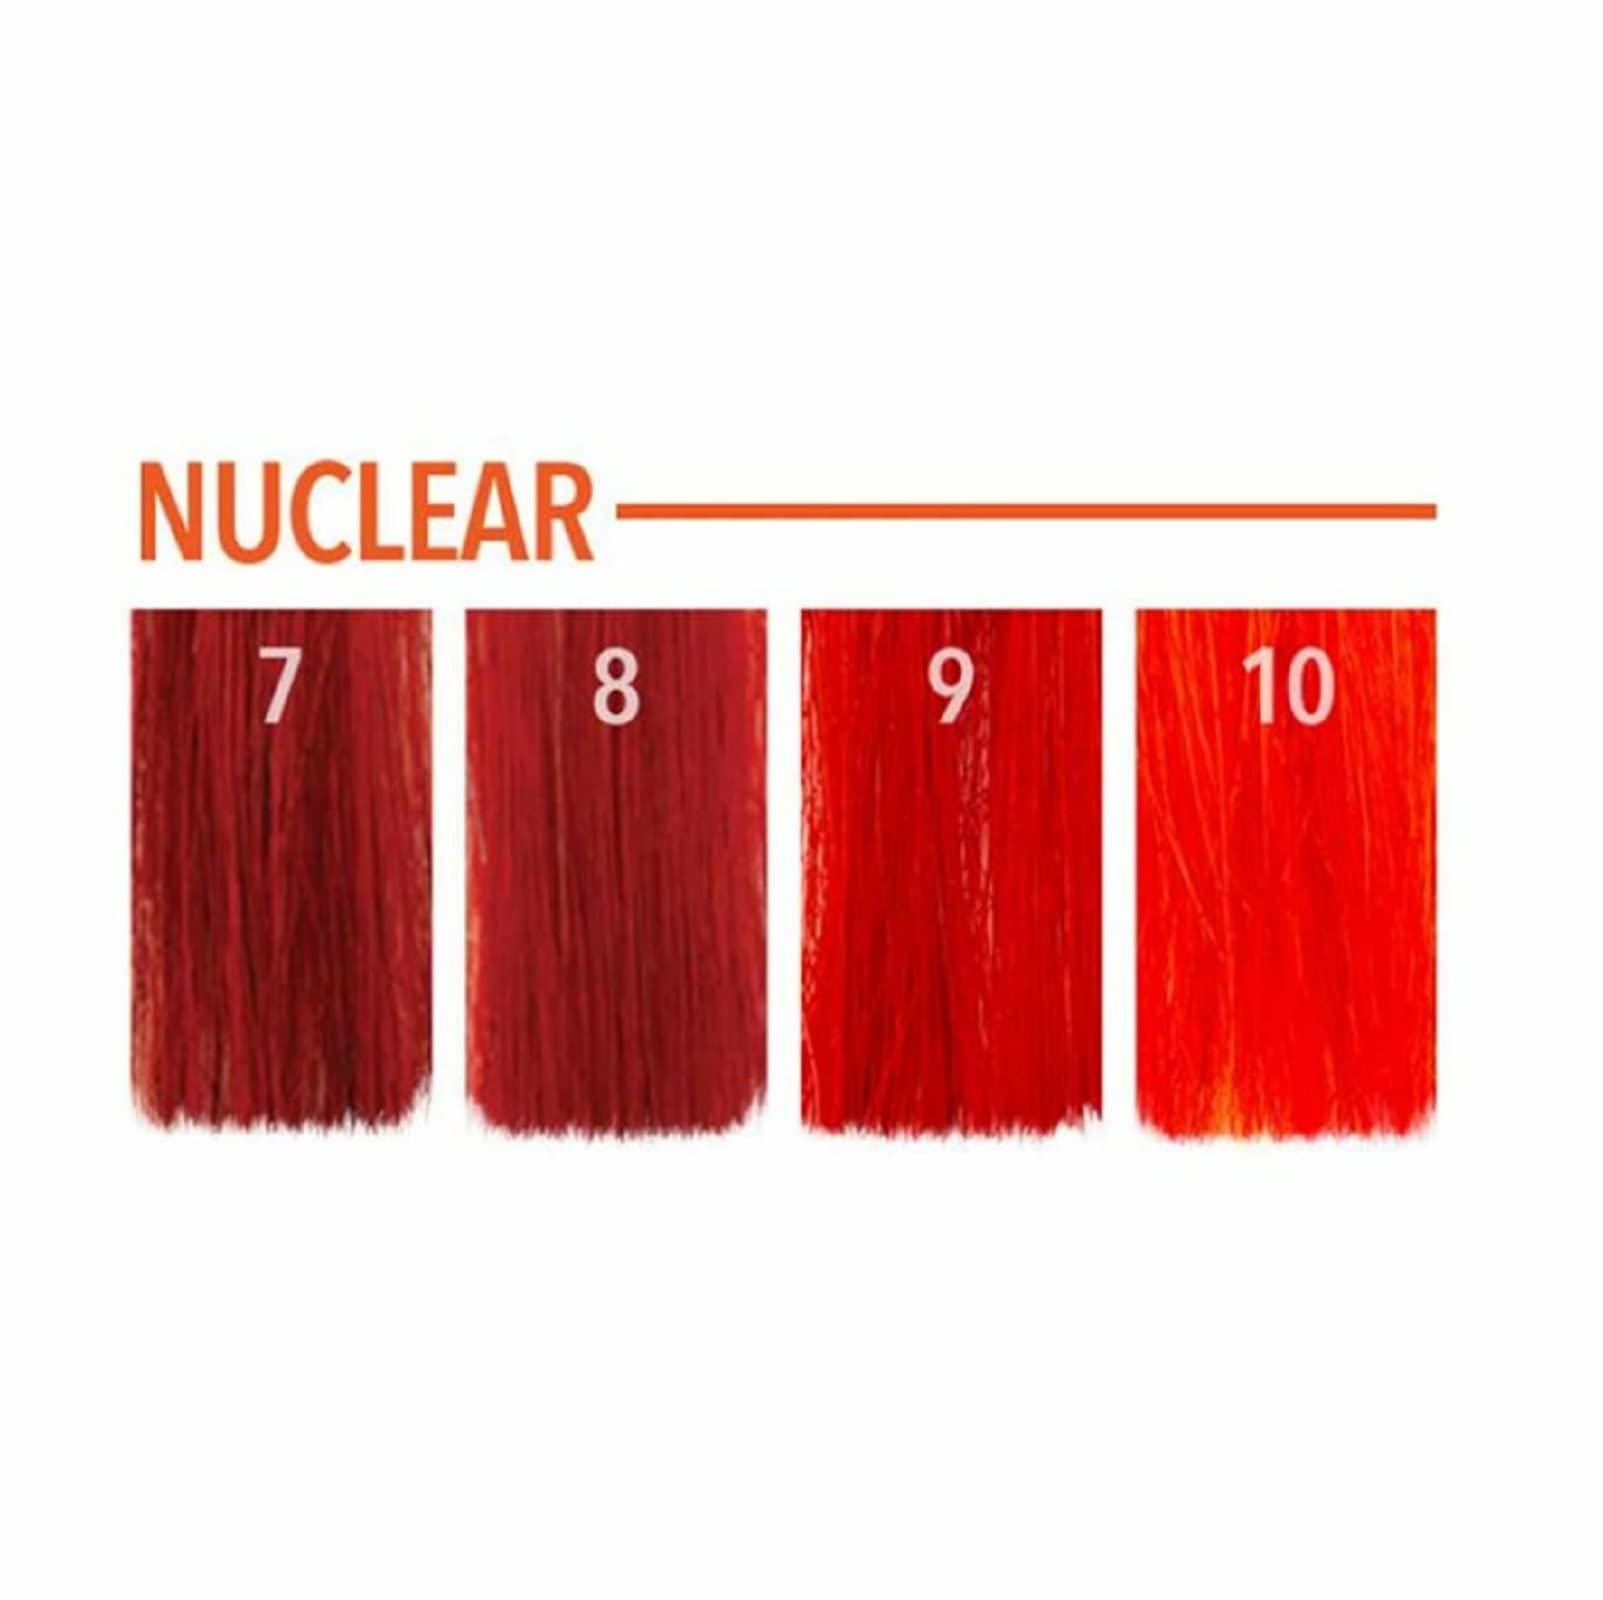 Pulp Riot Semi-Permanent Hair Color 4oz - NeoPop Nuclear